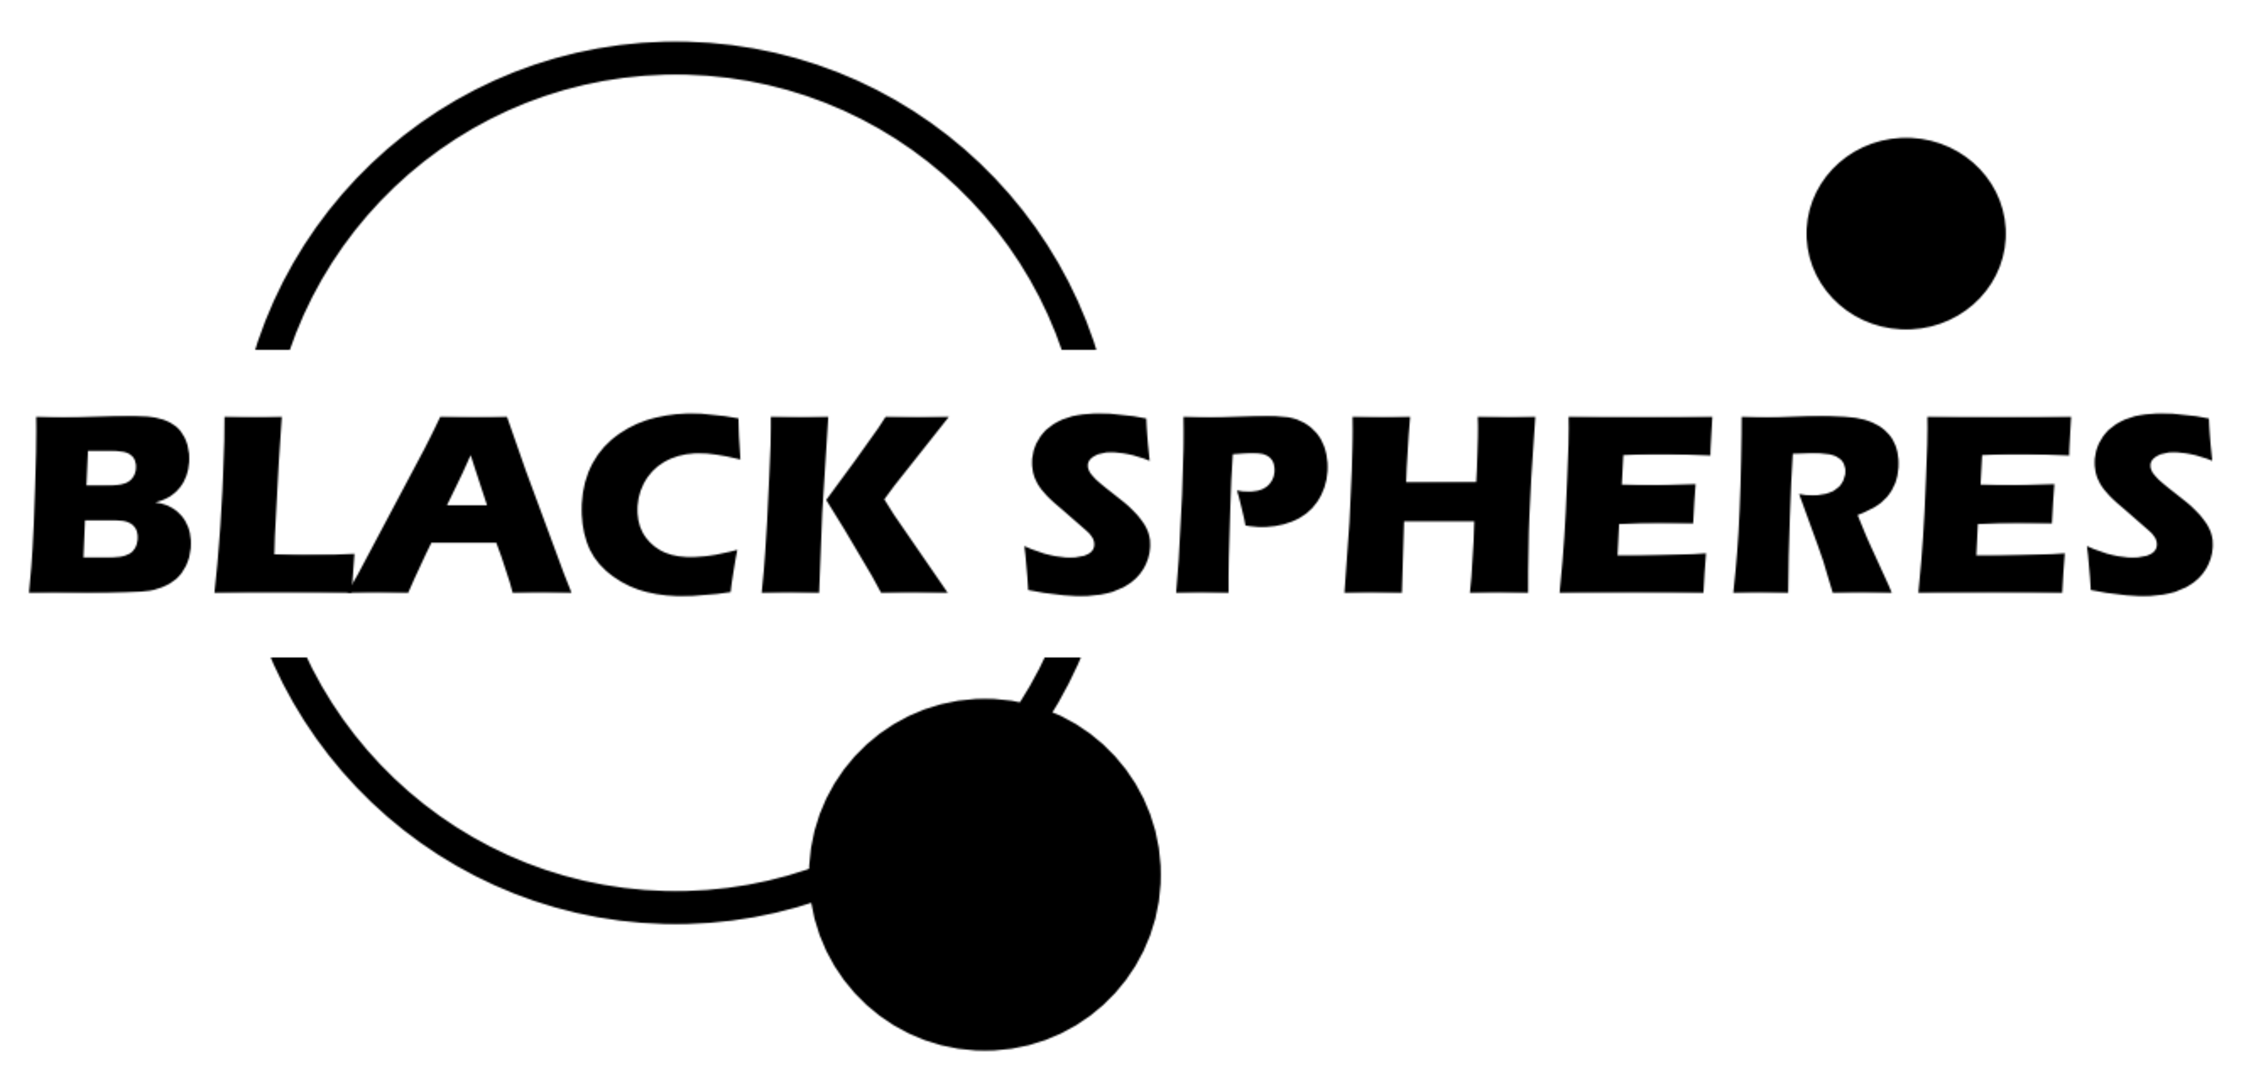 Black Spheres’ logo